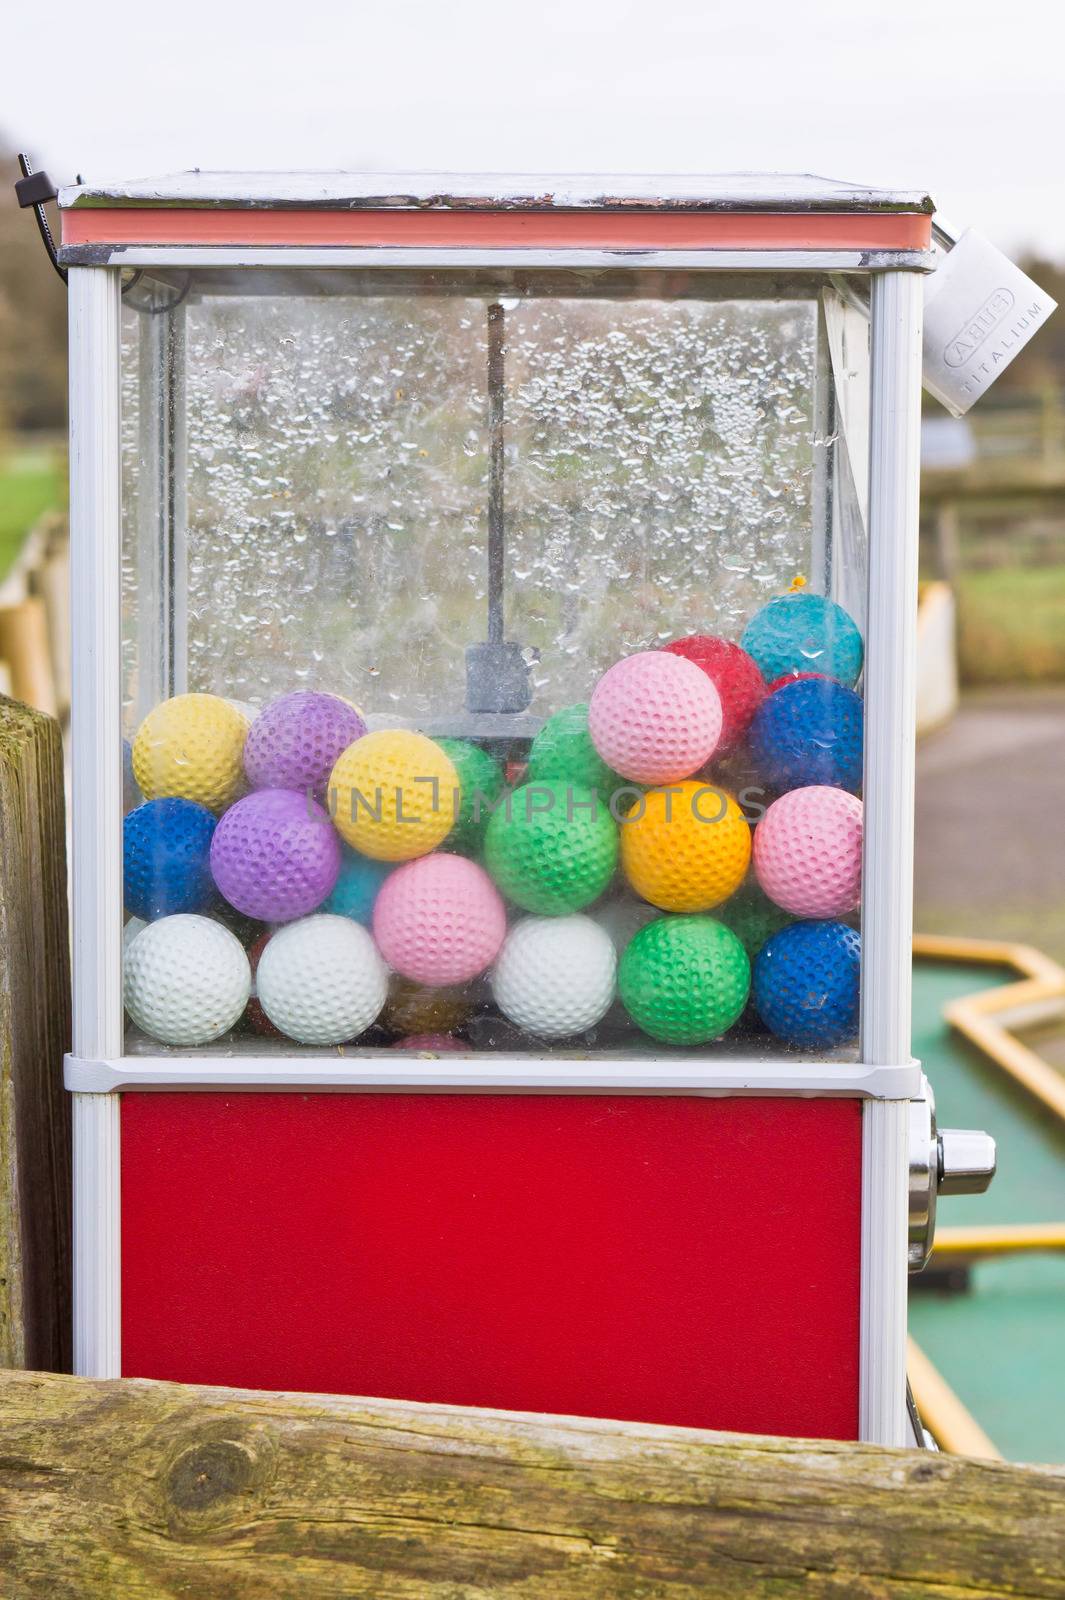 Colorful golf balls in a plastic dispenser